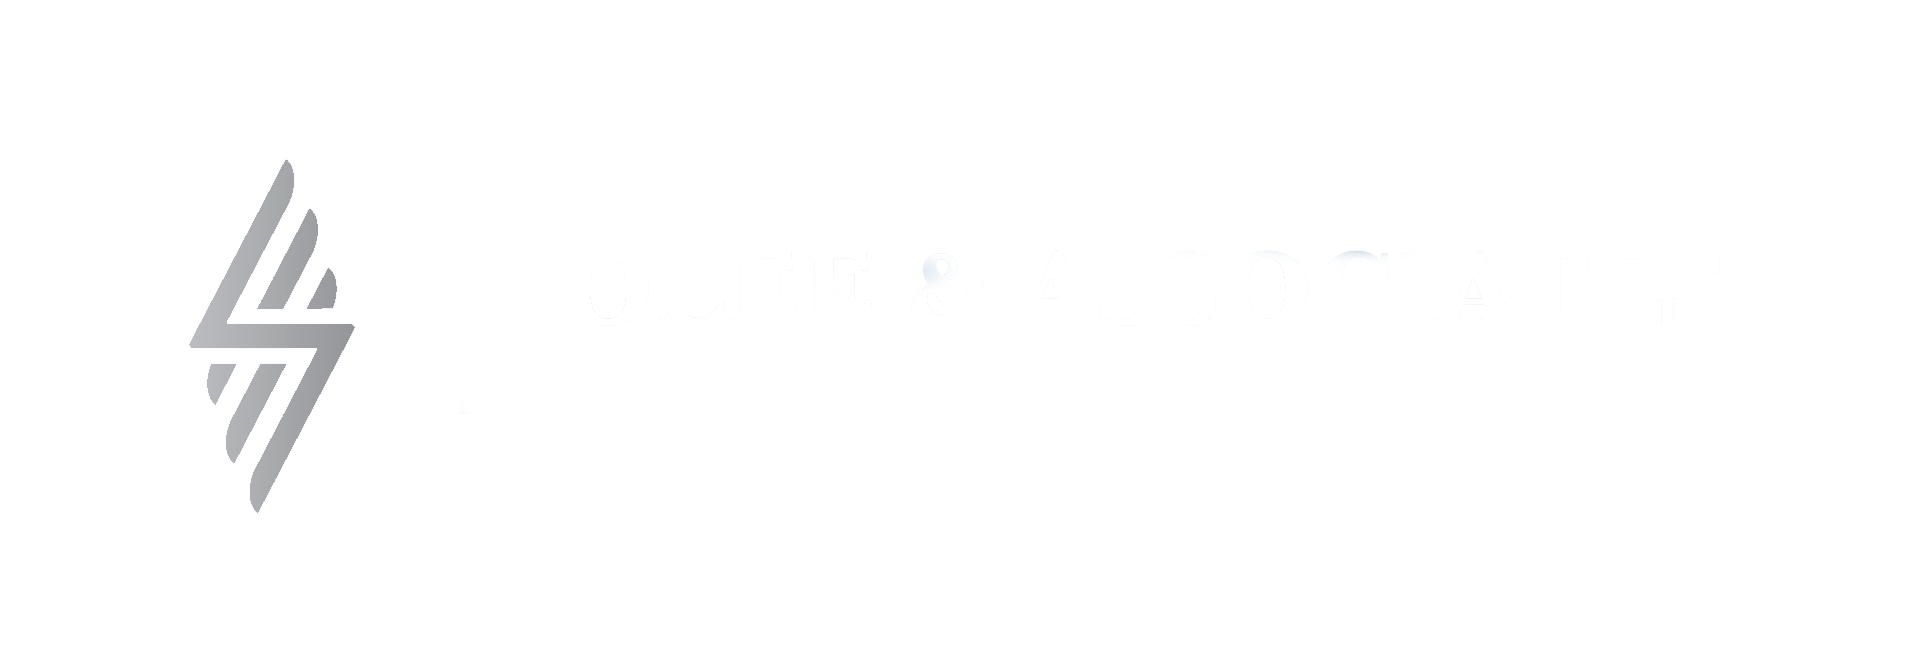 Stolee & Associates